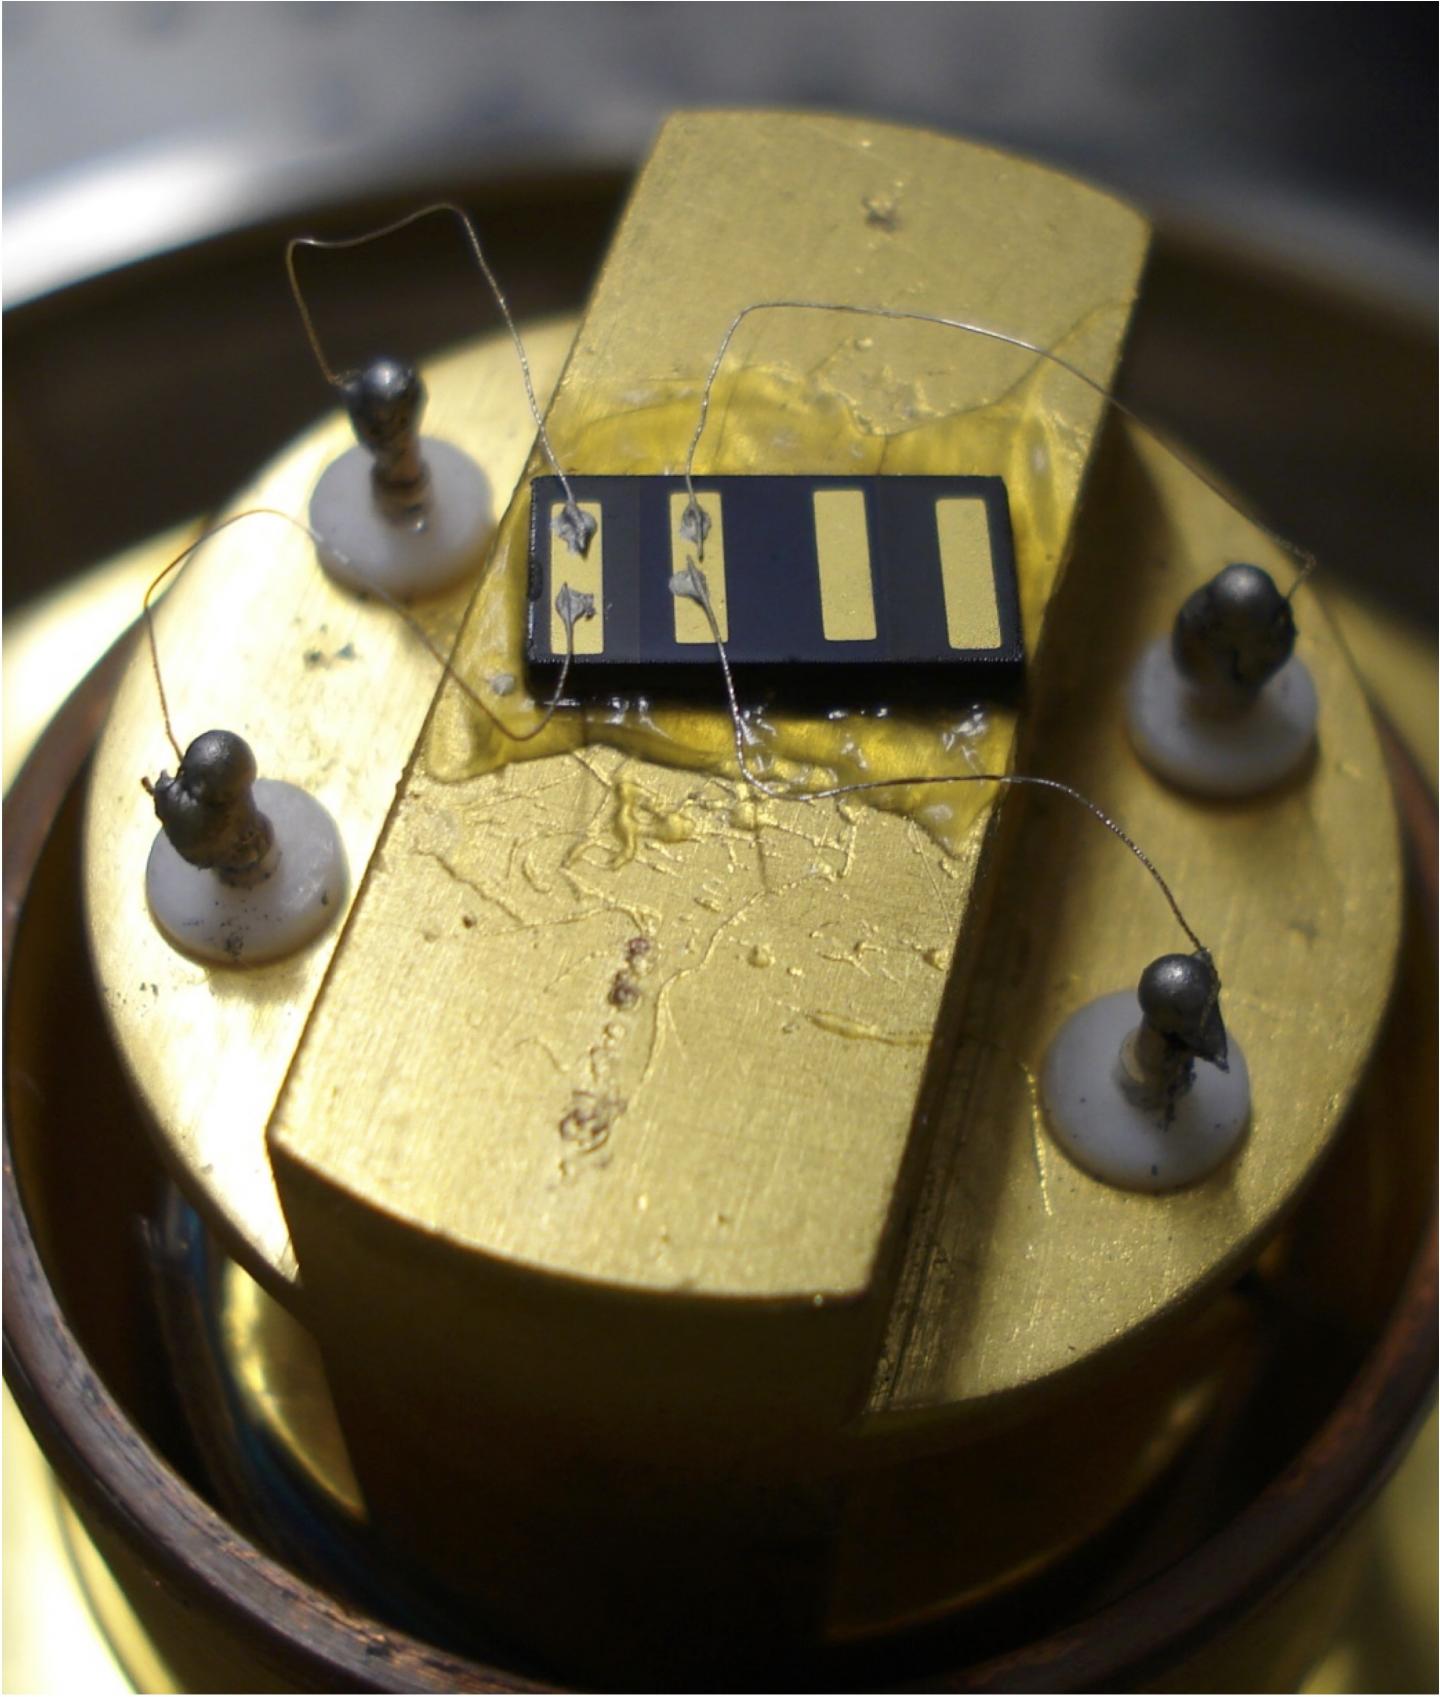 An experimental polaron solar cell in the lab